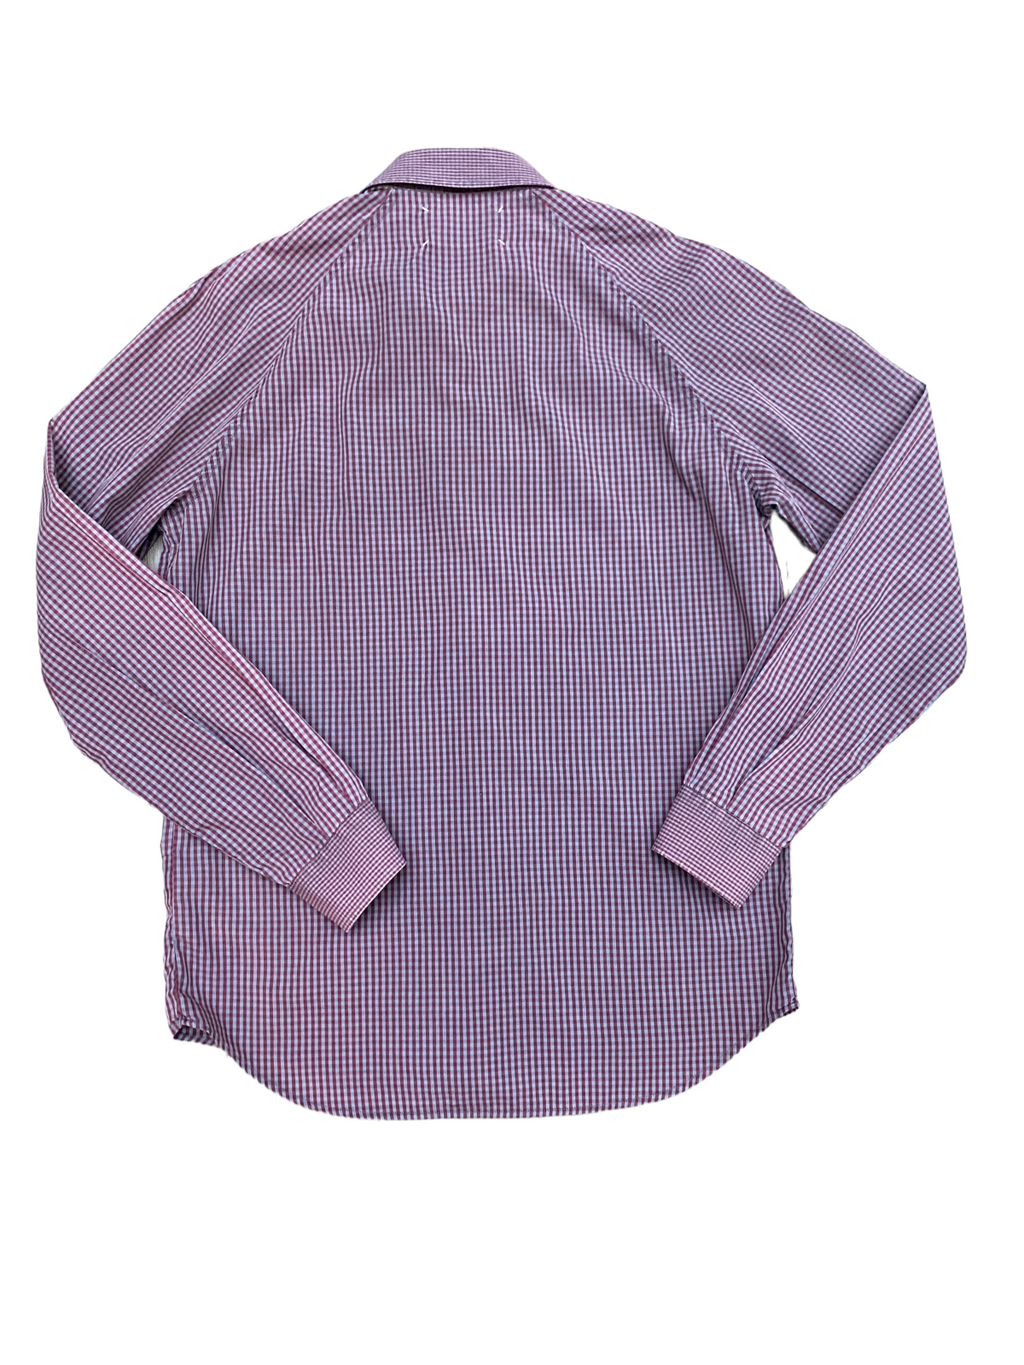 Vintage Men’s Checkered Shirt